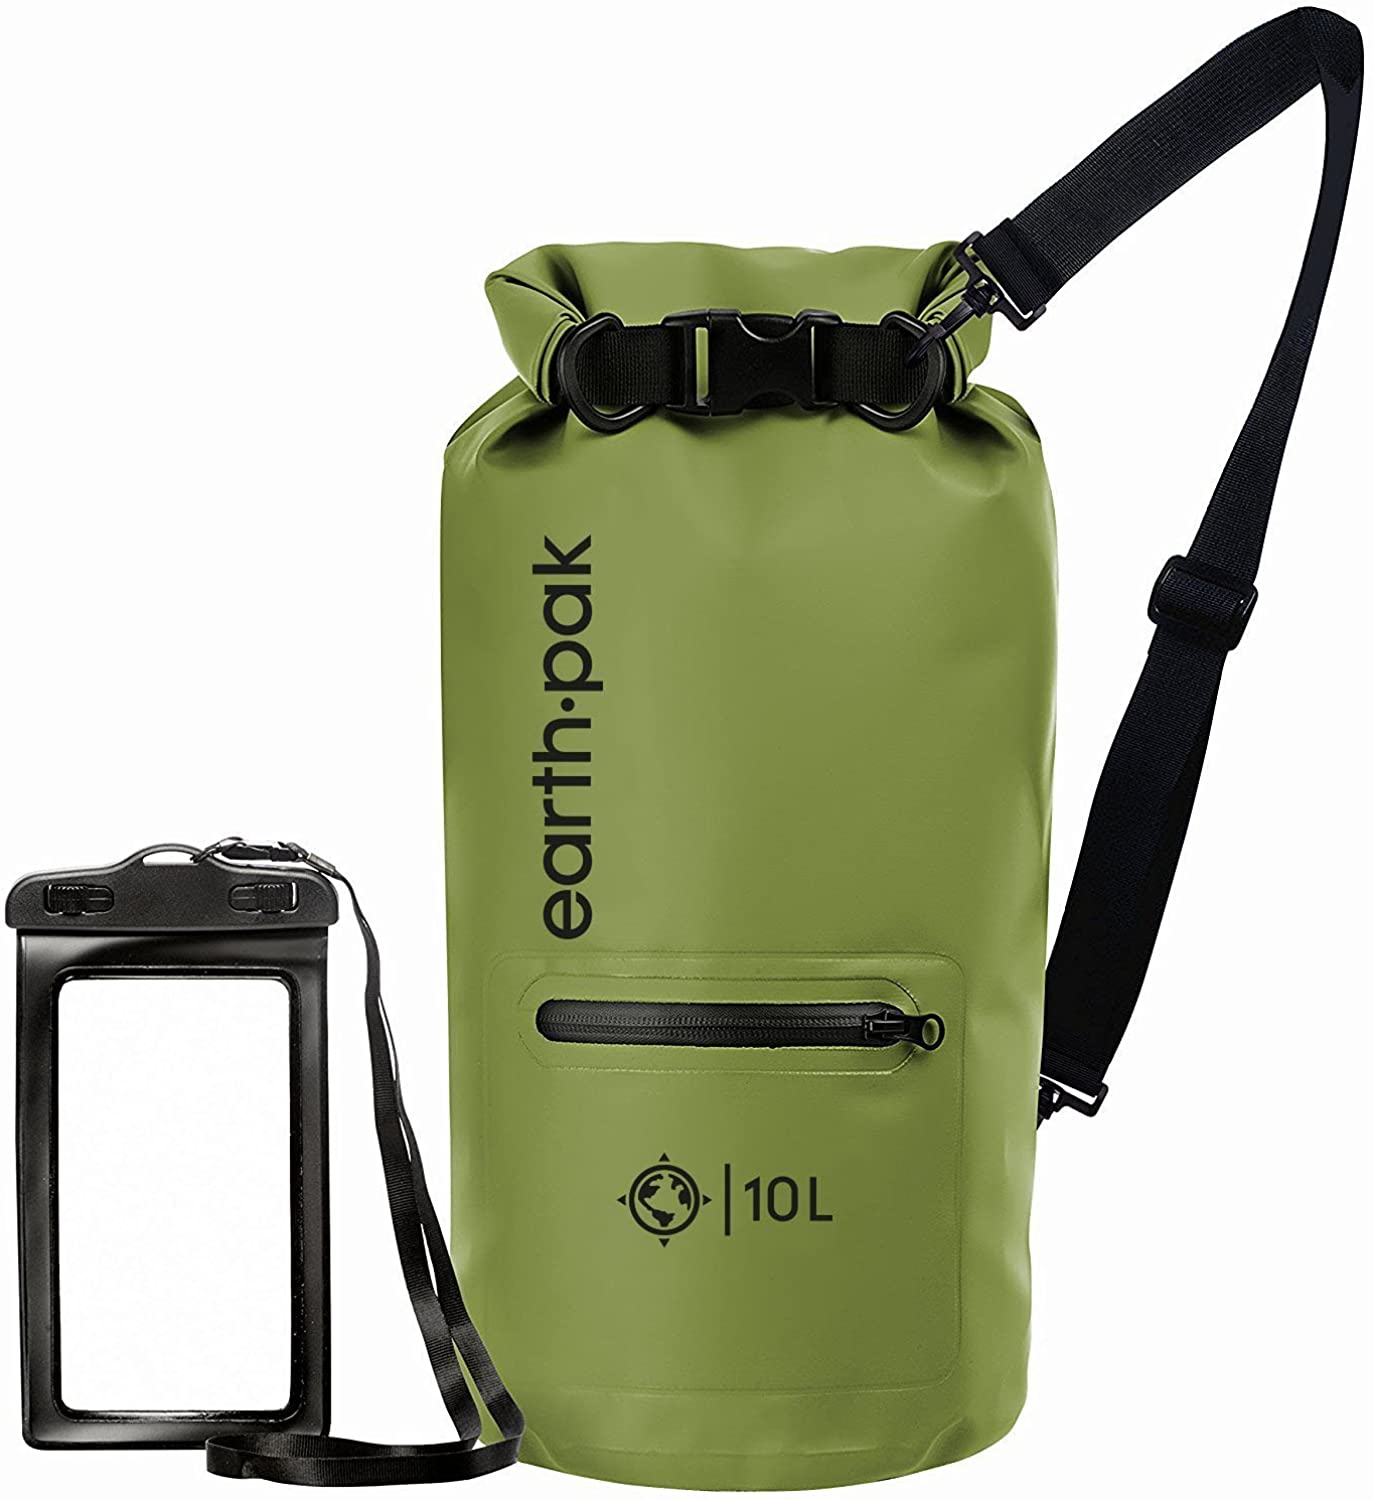 waterproof drybag for camping